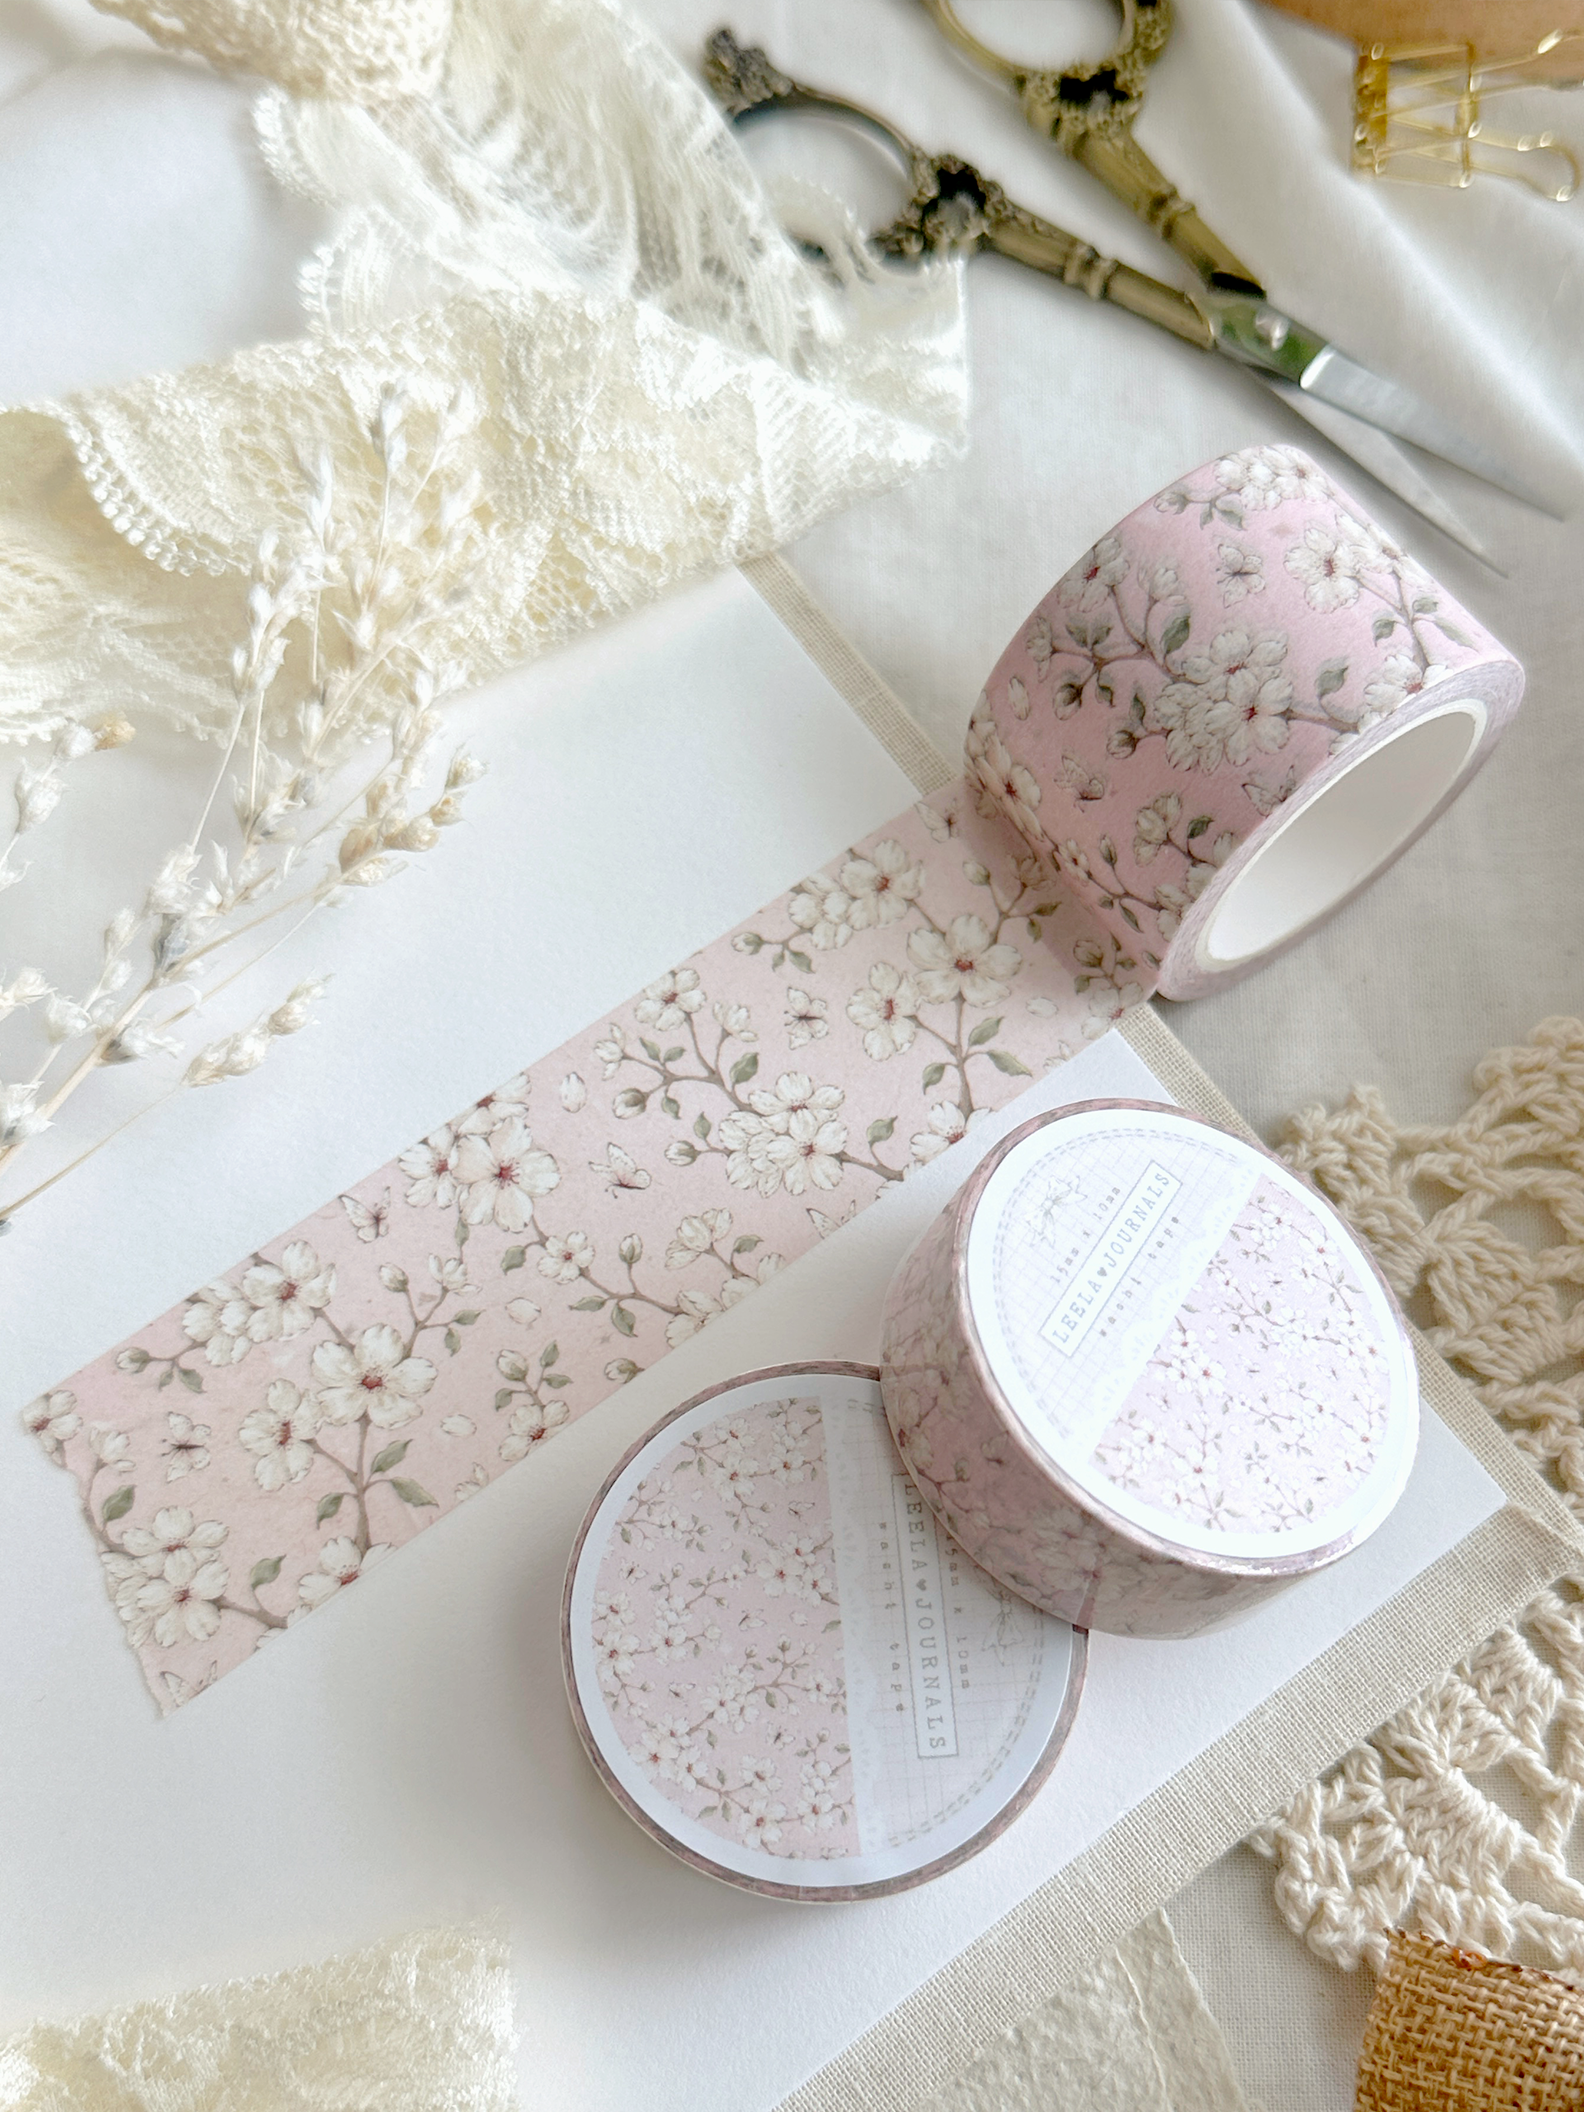 Paper & Quartz Pink Floral Decorative Washi Tape